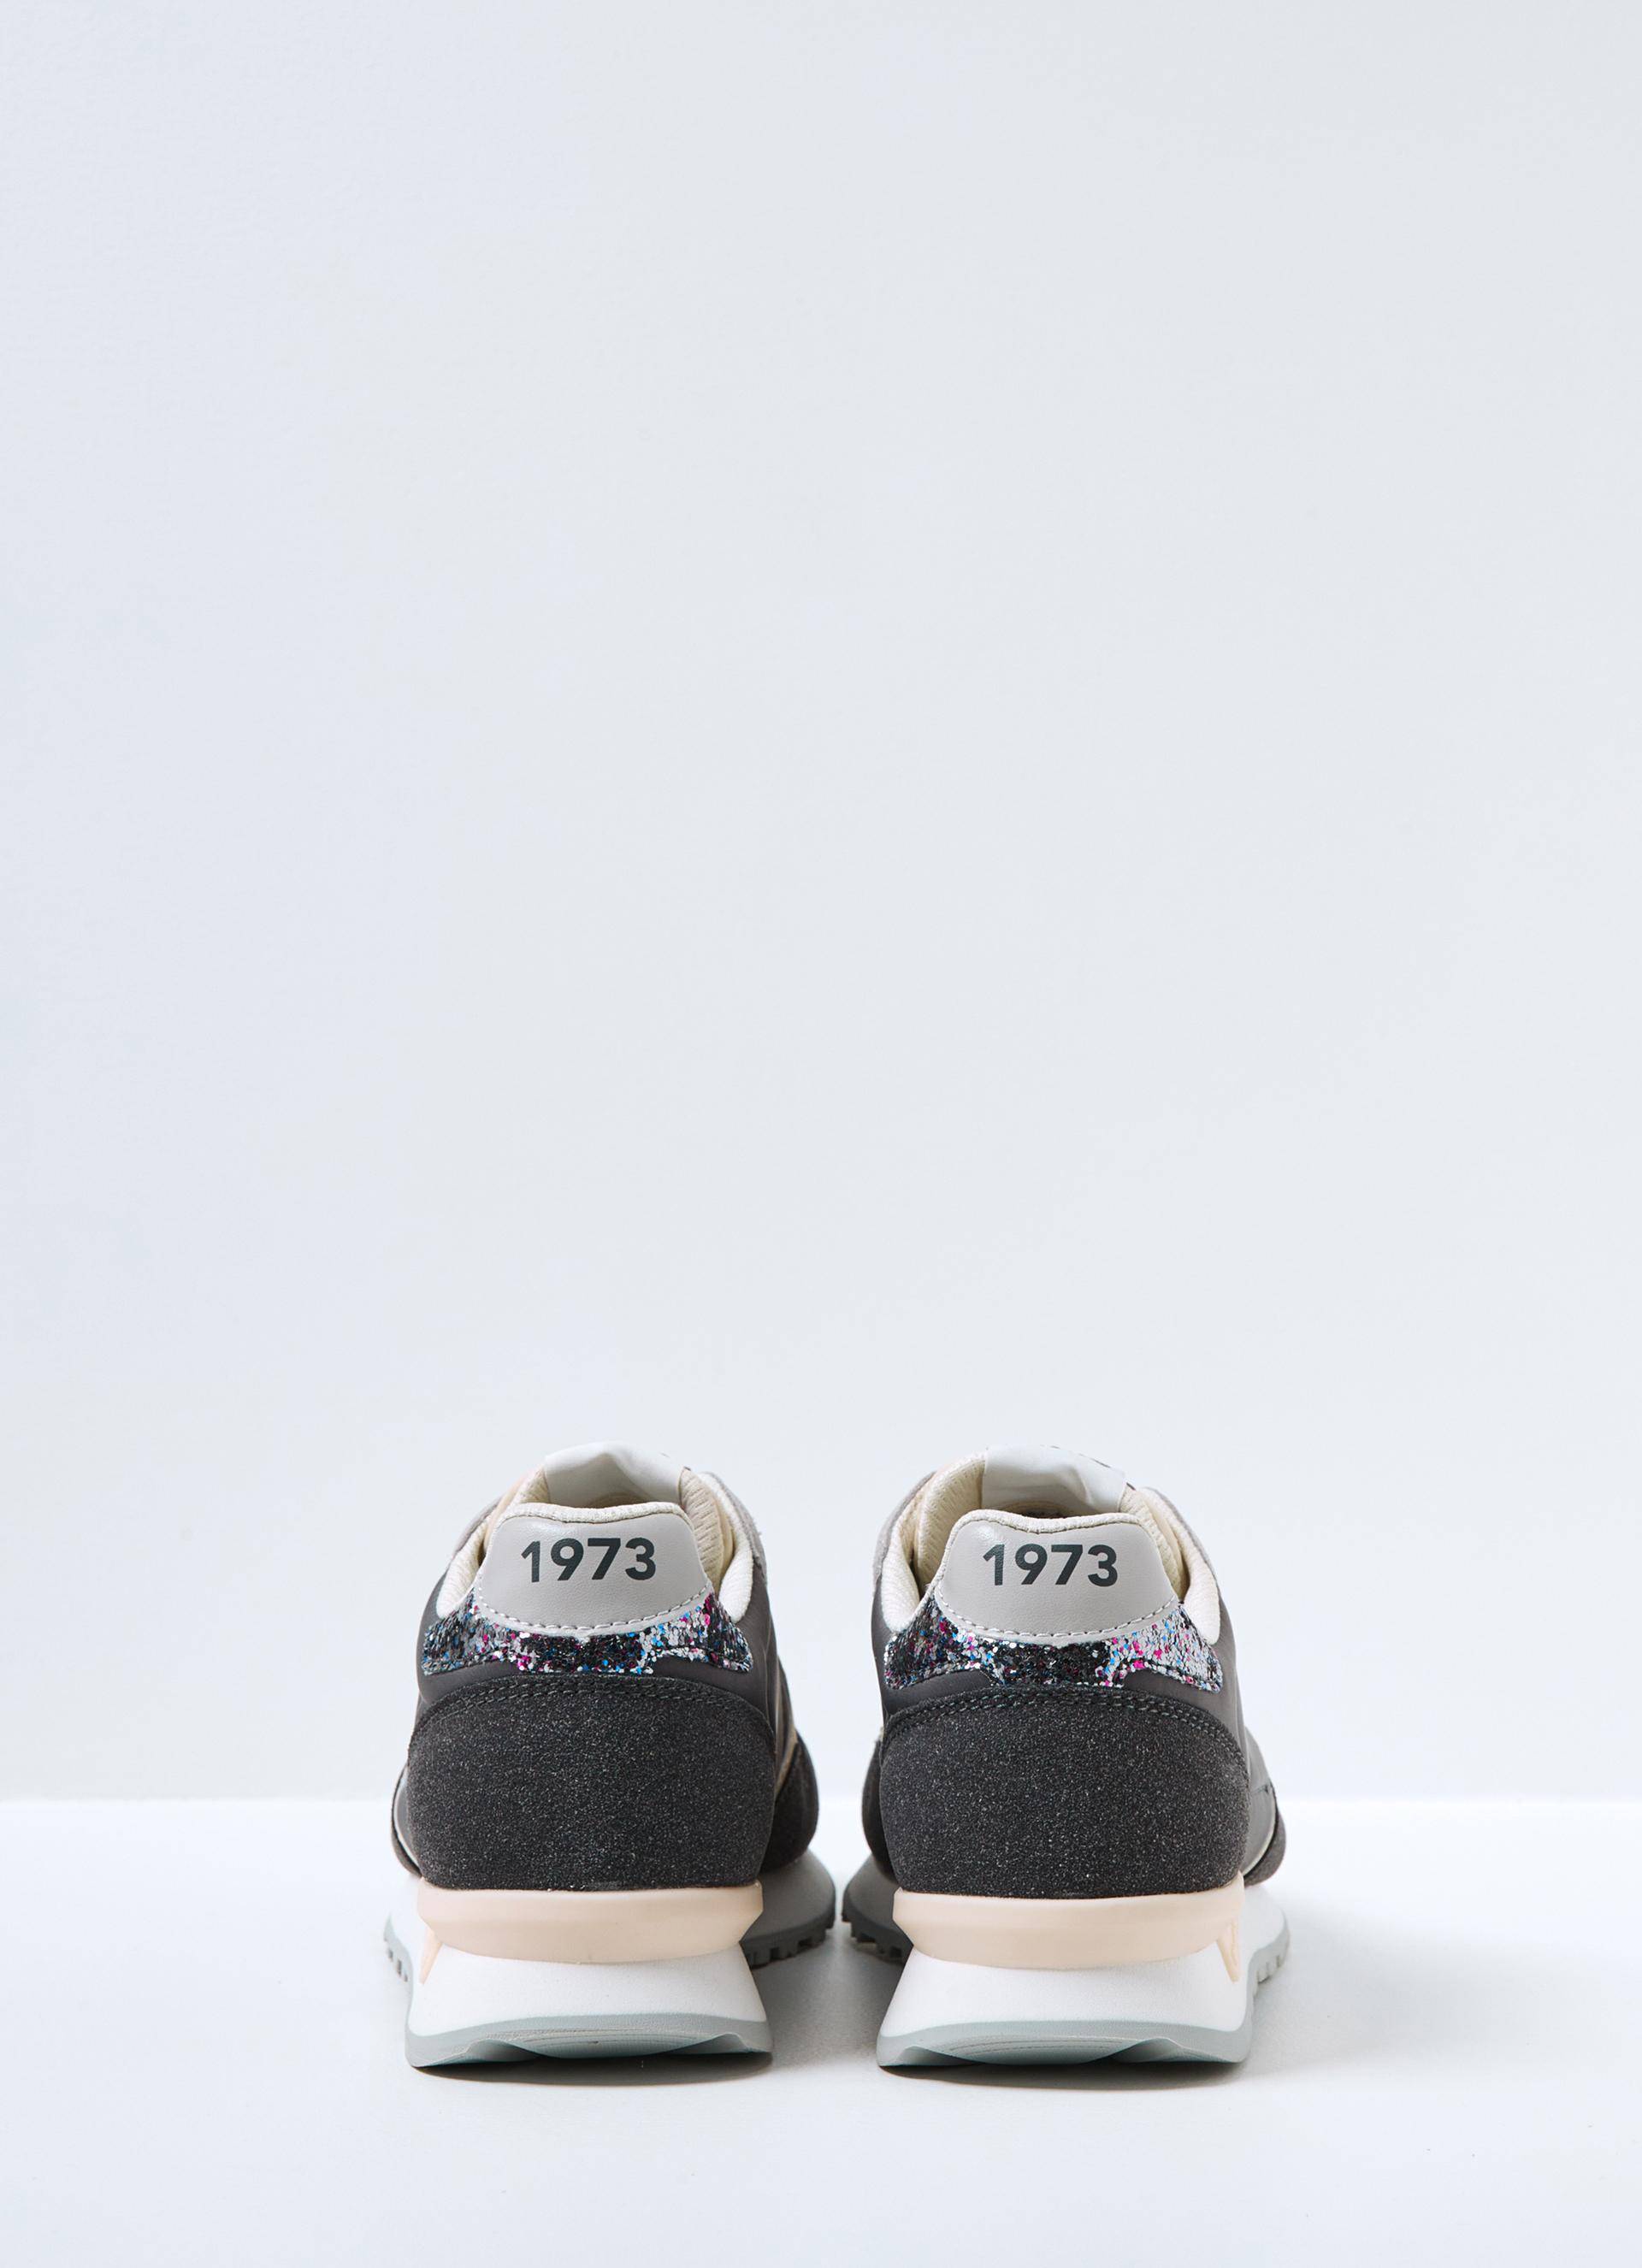 Женские кроссовки Pepe Jeans London (BRITT W NIGHT s_PLS31322), серые, цвет серый, размер 37 - фото 4